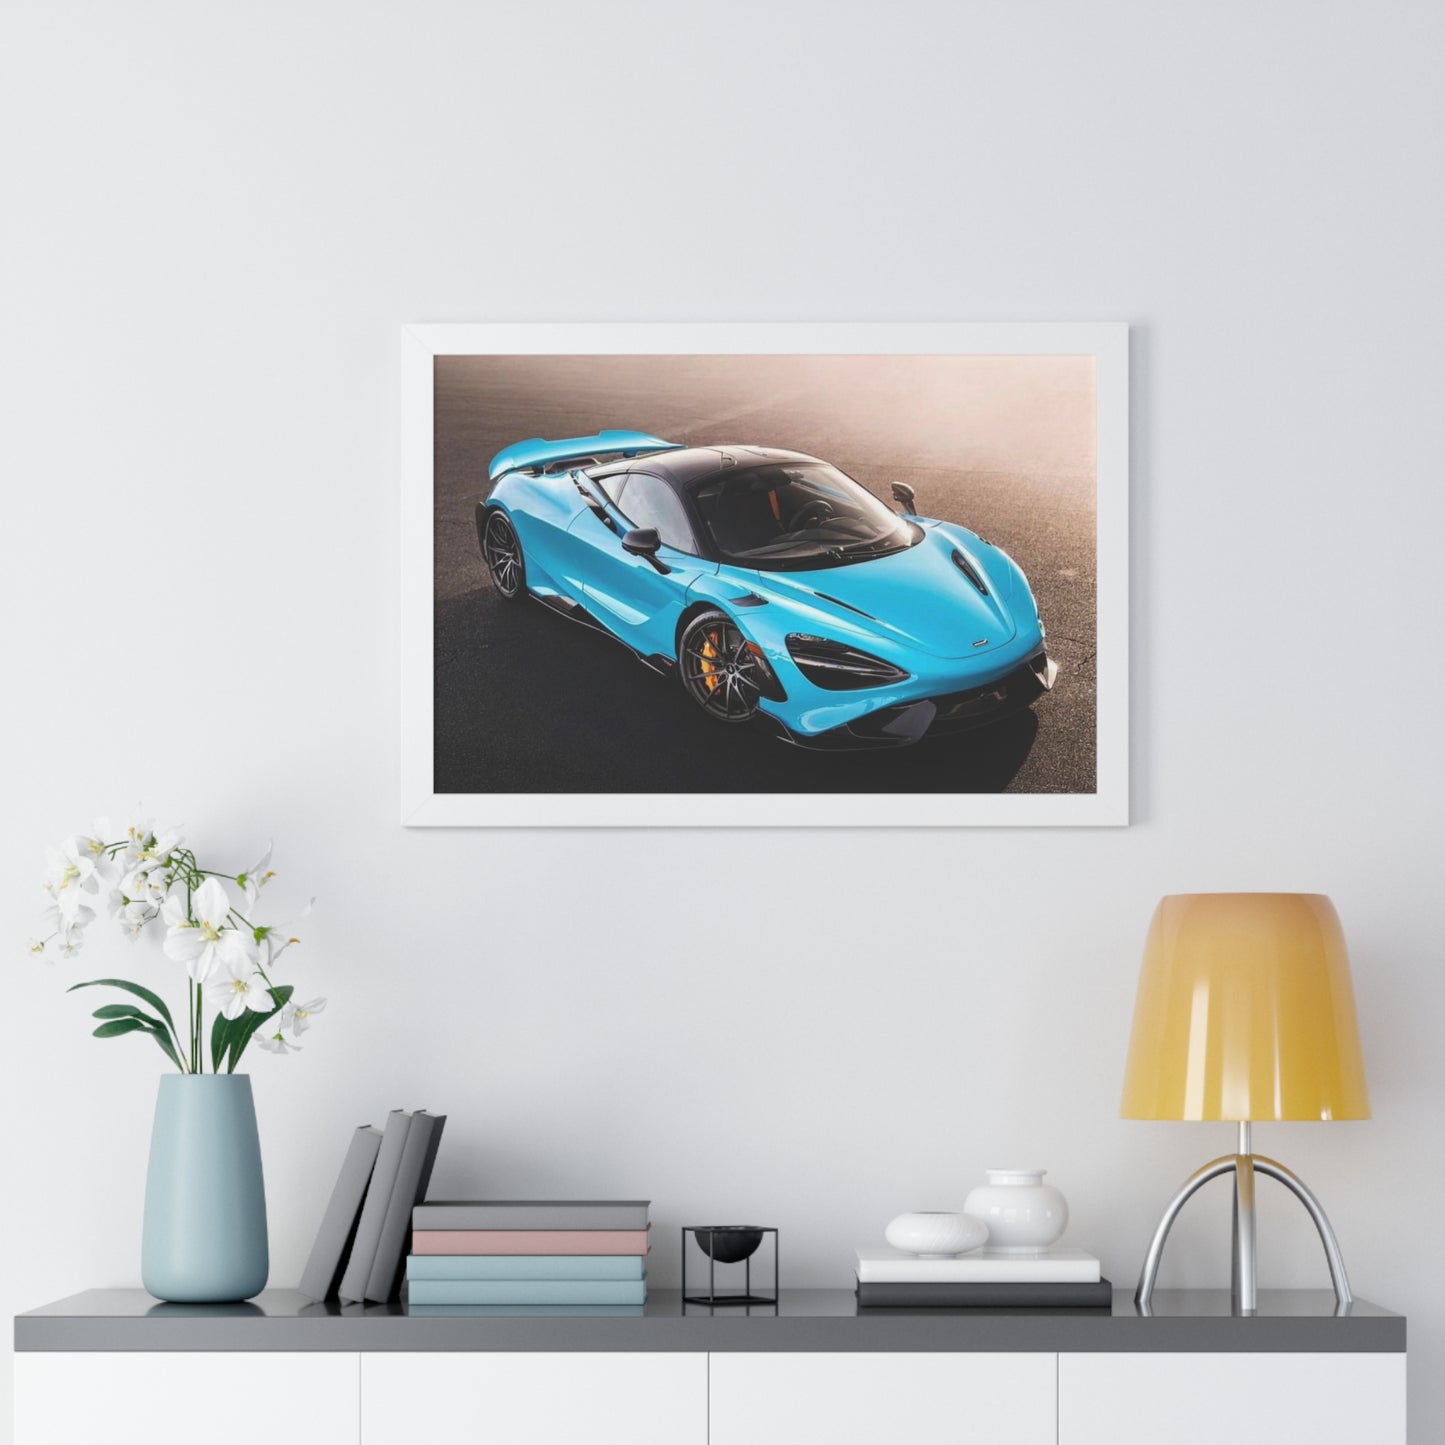 "Tarmac" 30" x 20" Framed McLaren Poster